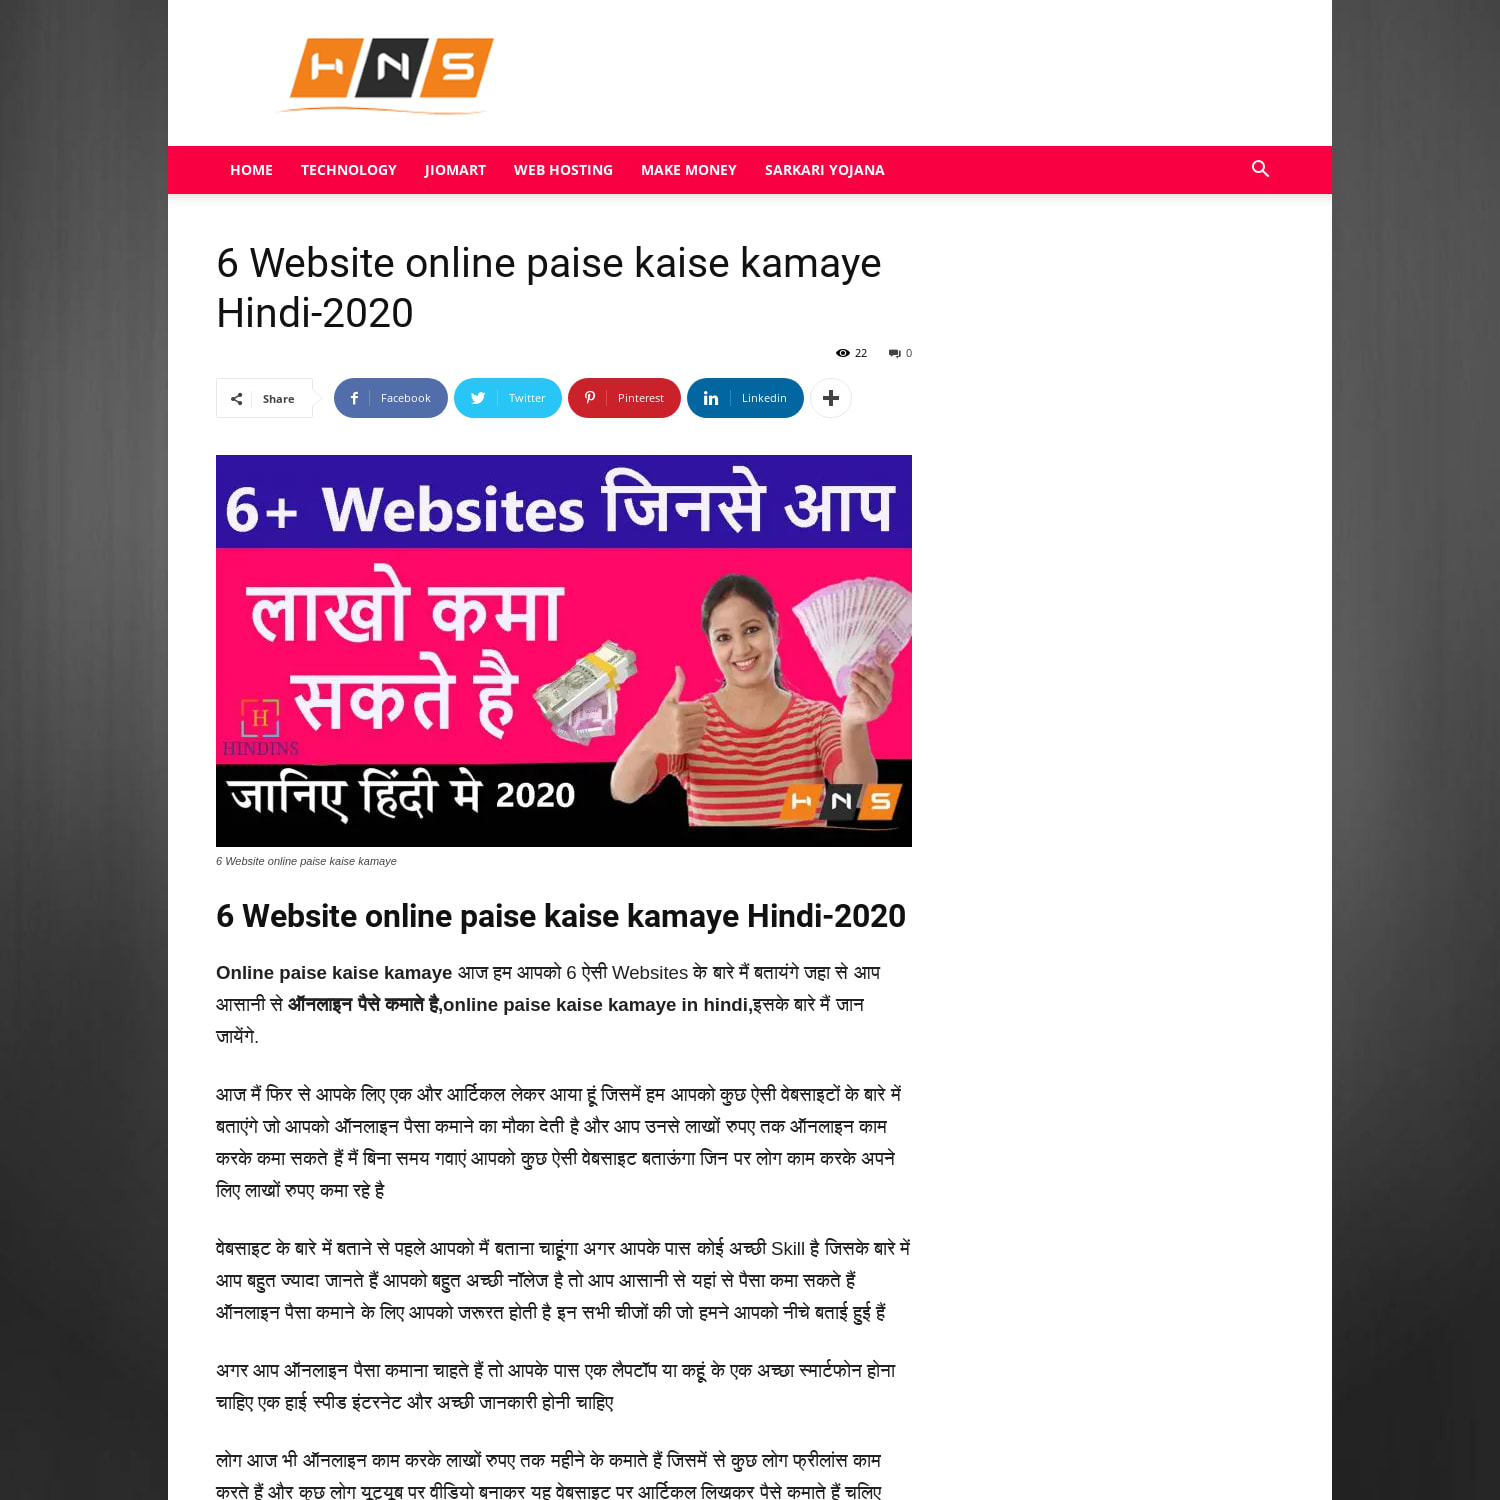 6 Website online paise kaise kamaye Hindi-2020